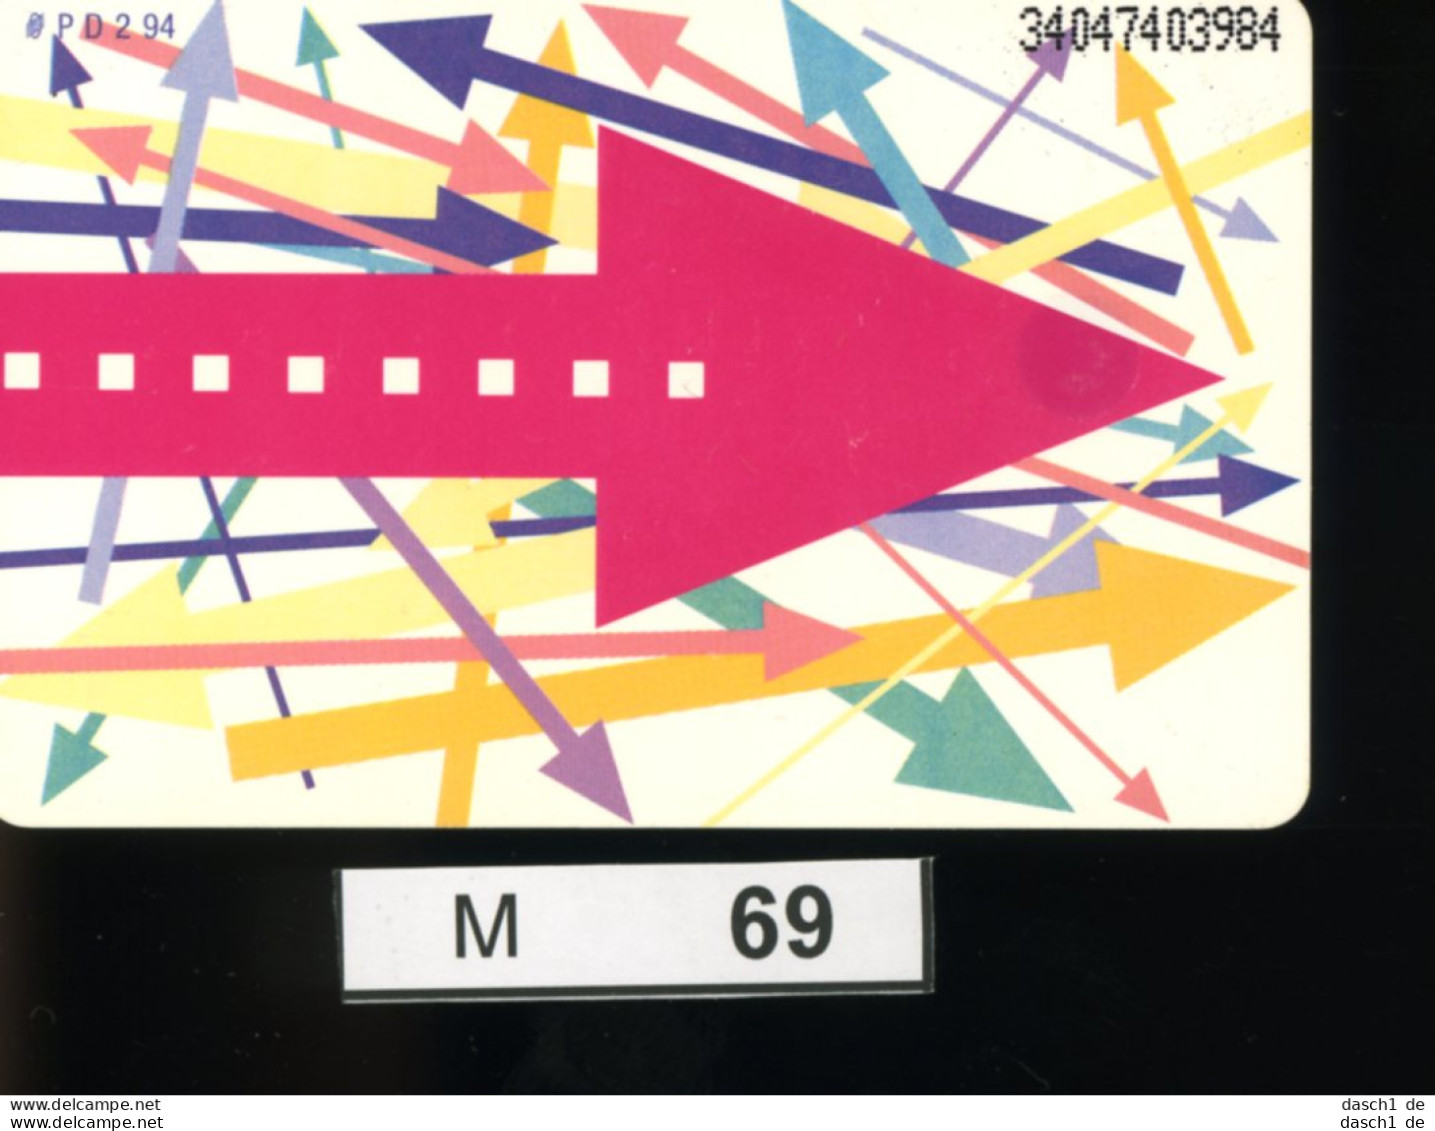 M069, Deutschland, TK, Standardkarte Telekom, 12 DM, 1994 - P & PD-Series : Guichet - D. Telekom